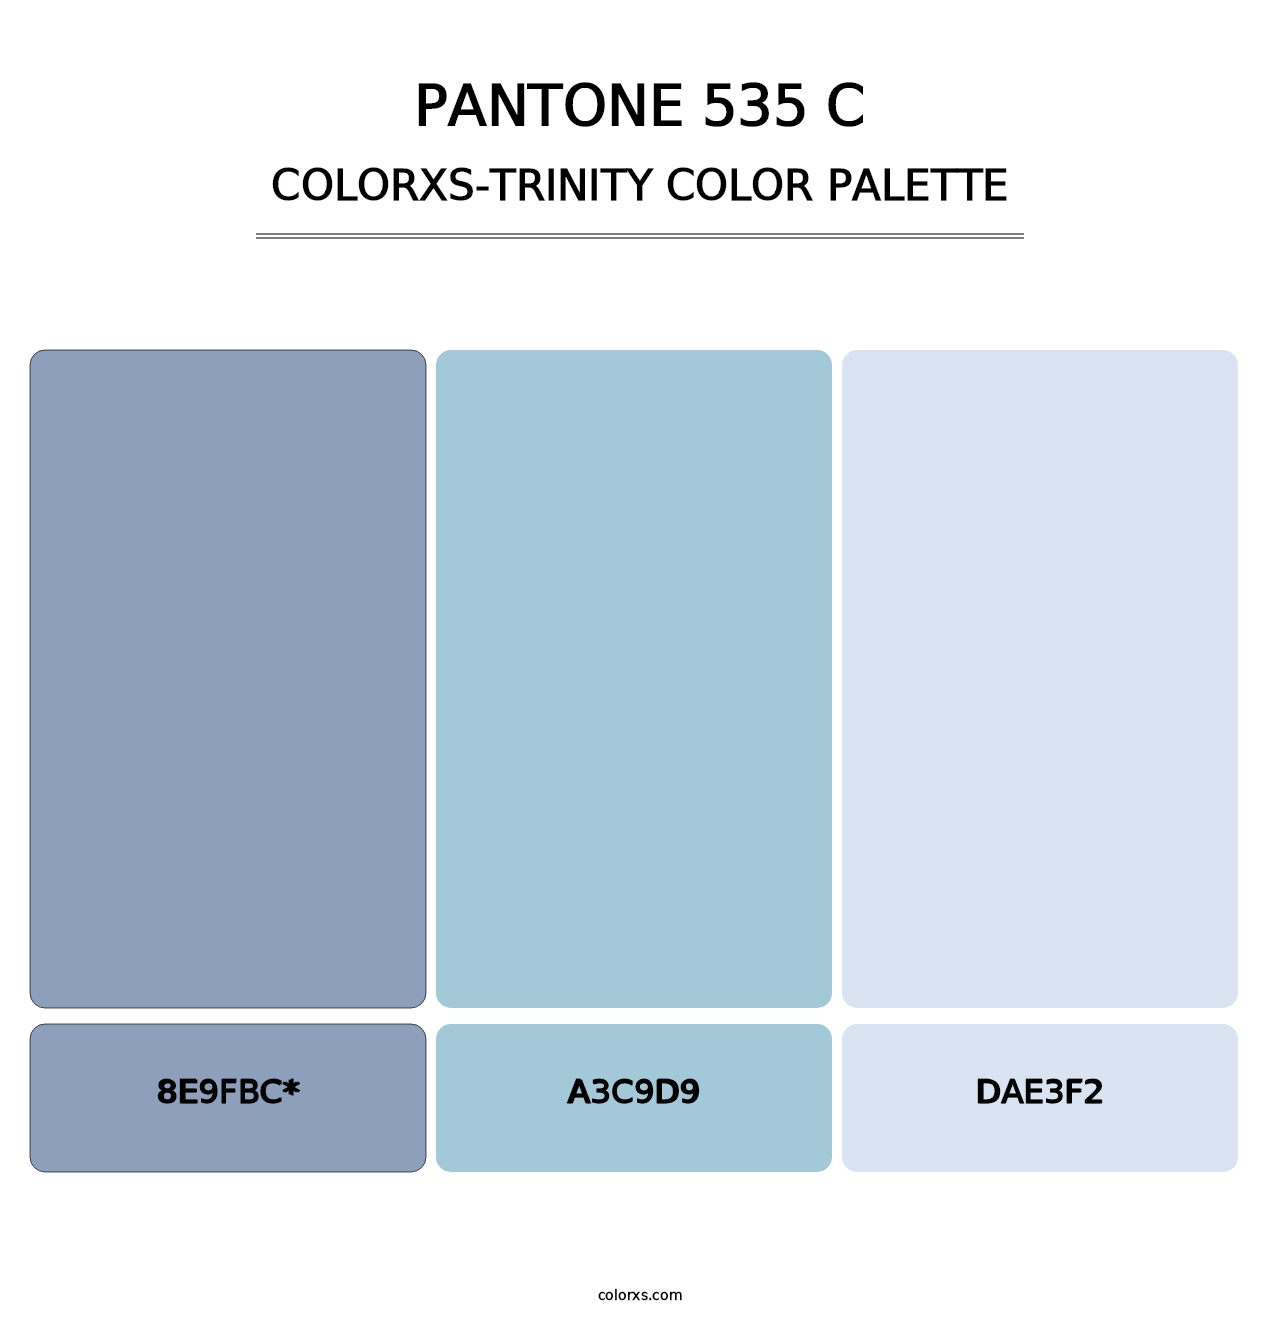 PANTONE 535 C - Colorxs Trinity Palette